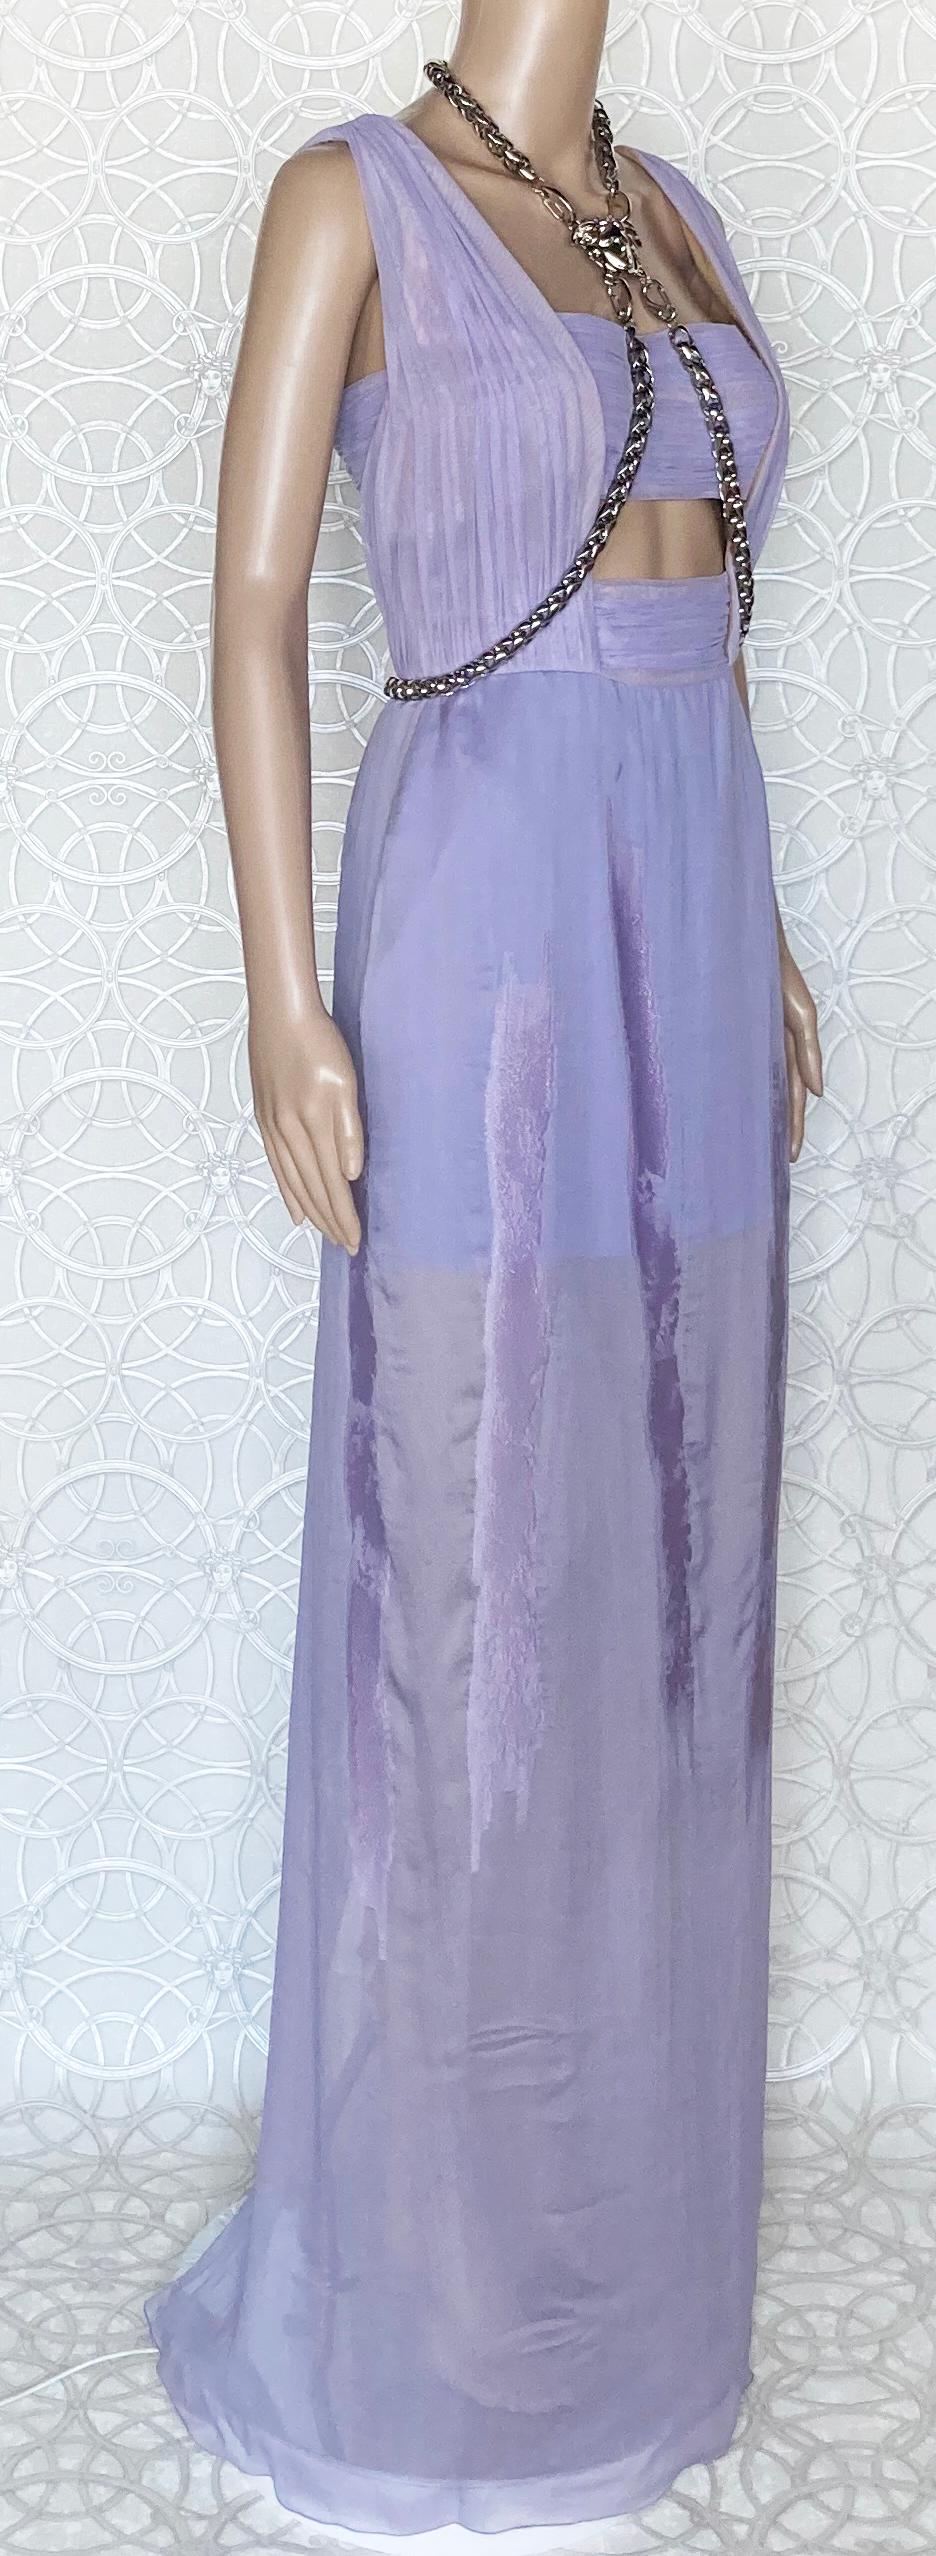 New VERSACE Lilac Chiffon Long Dress with Medusa Chains 38 2